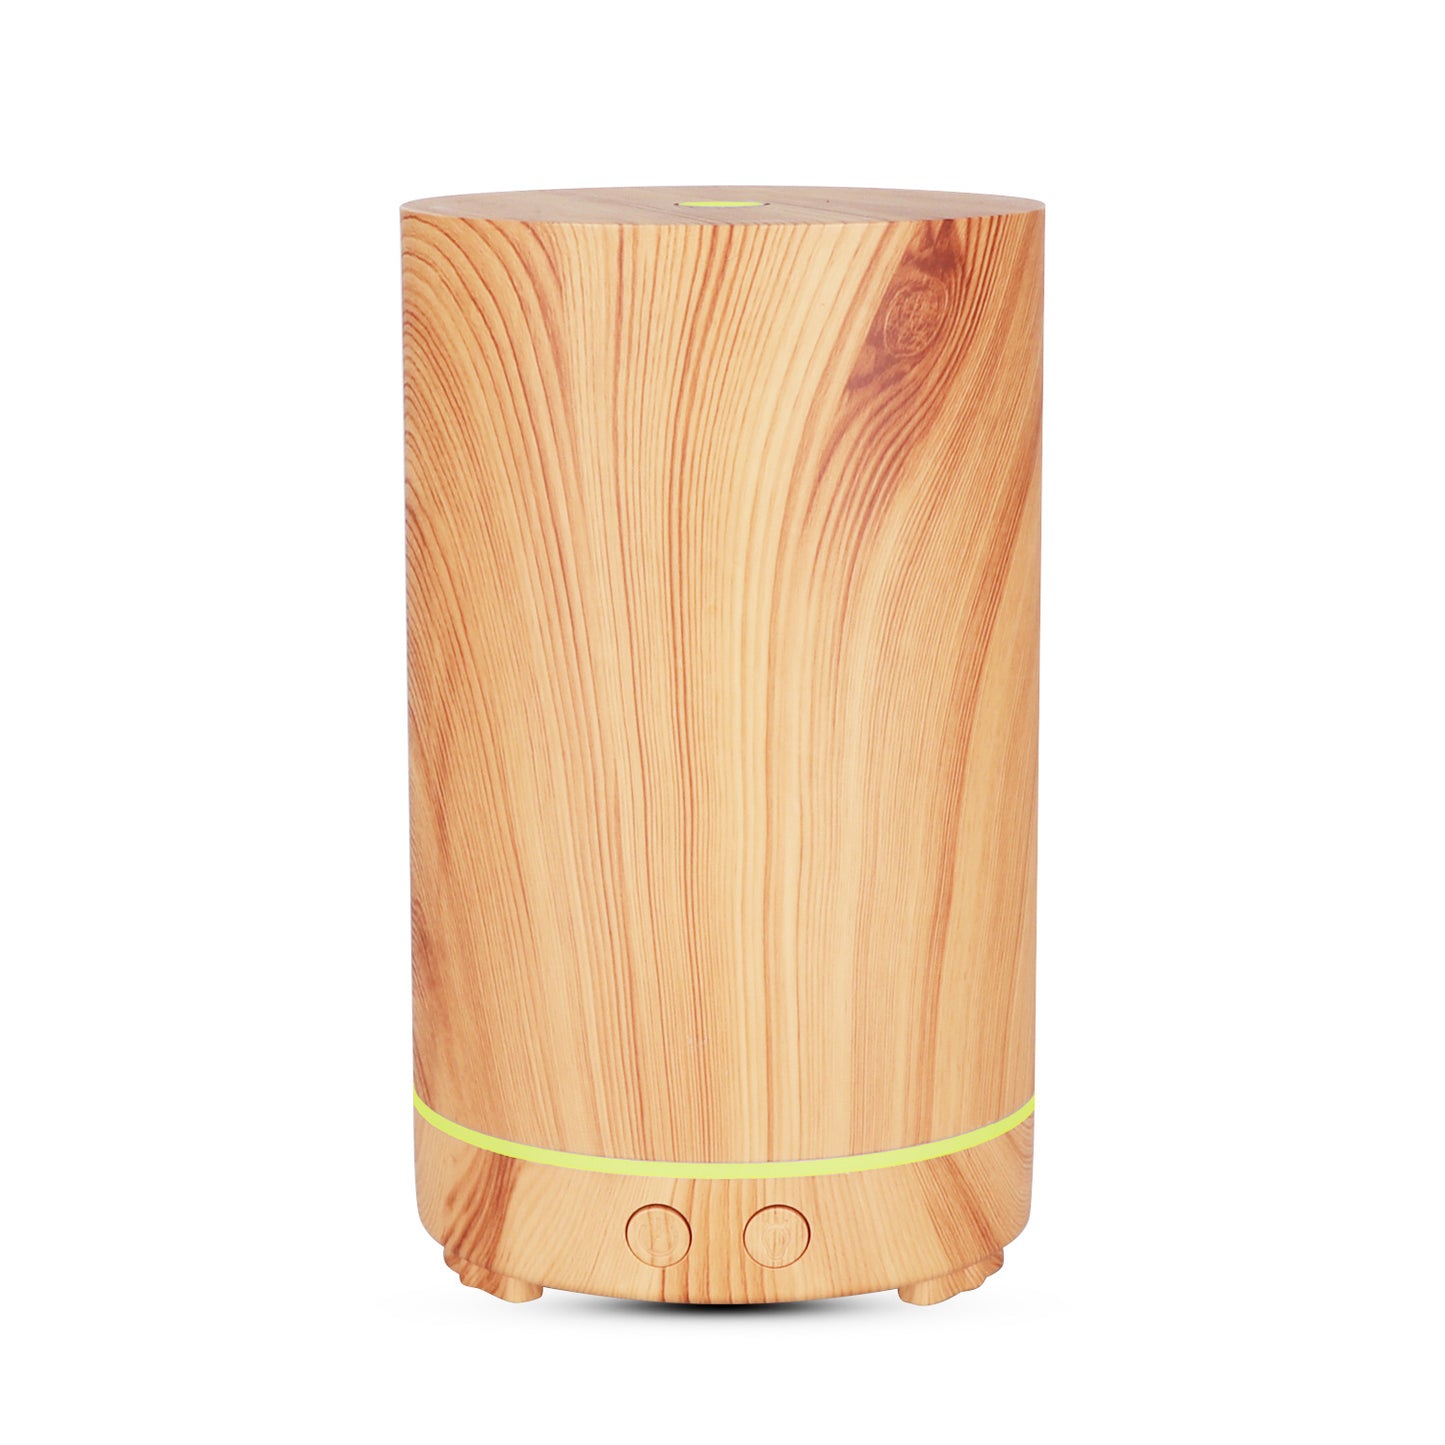 Wood Grain Humidifier